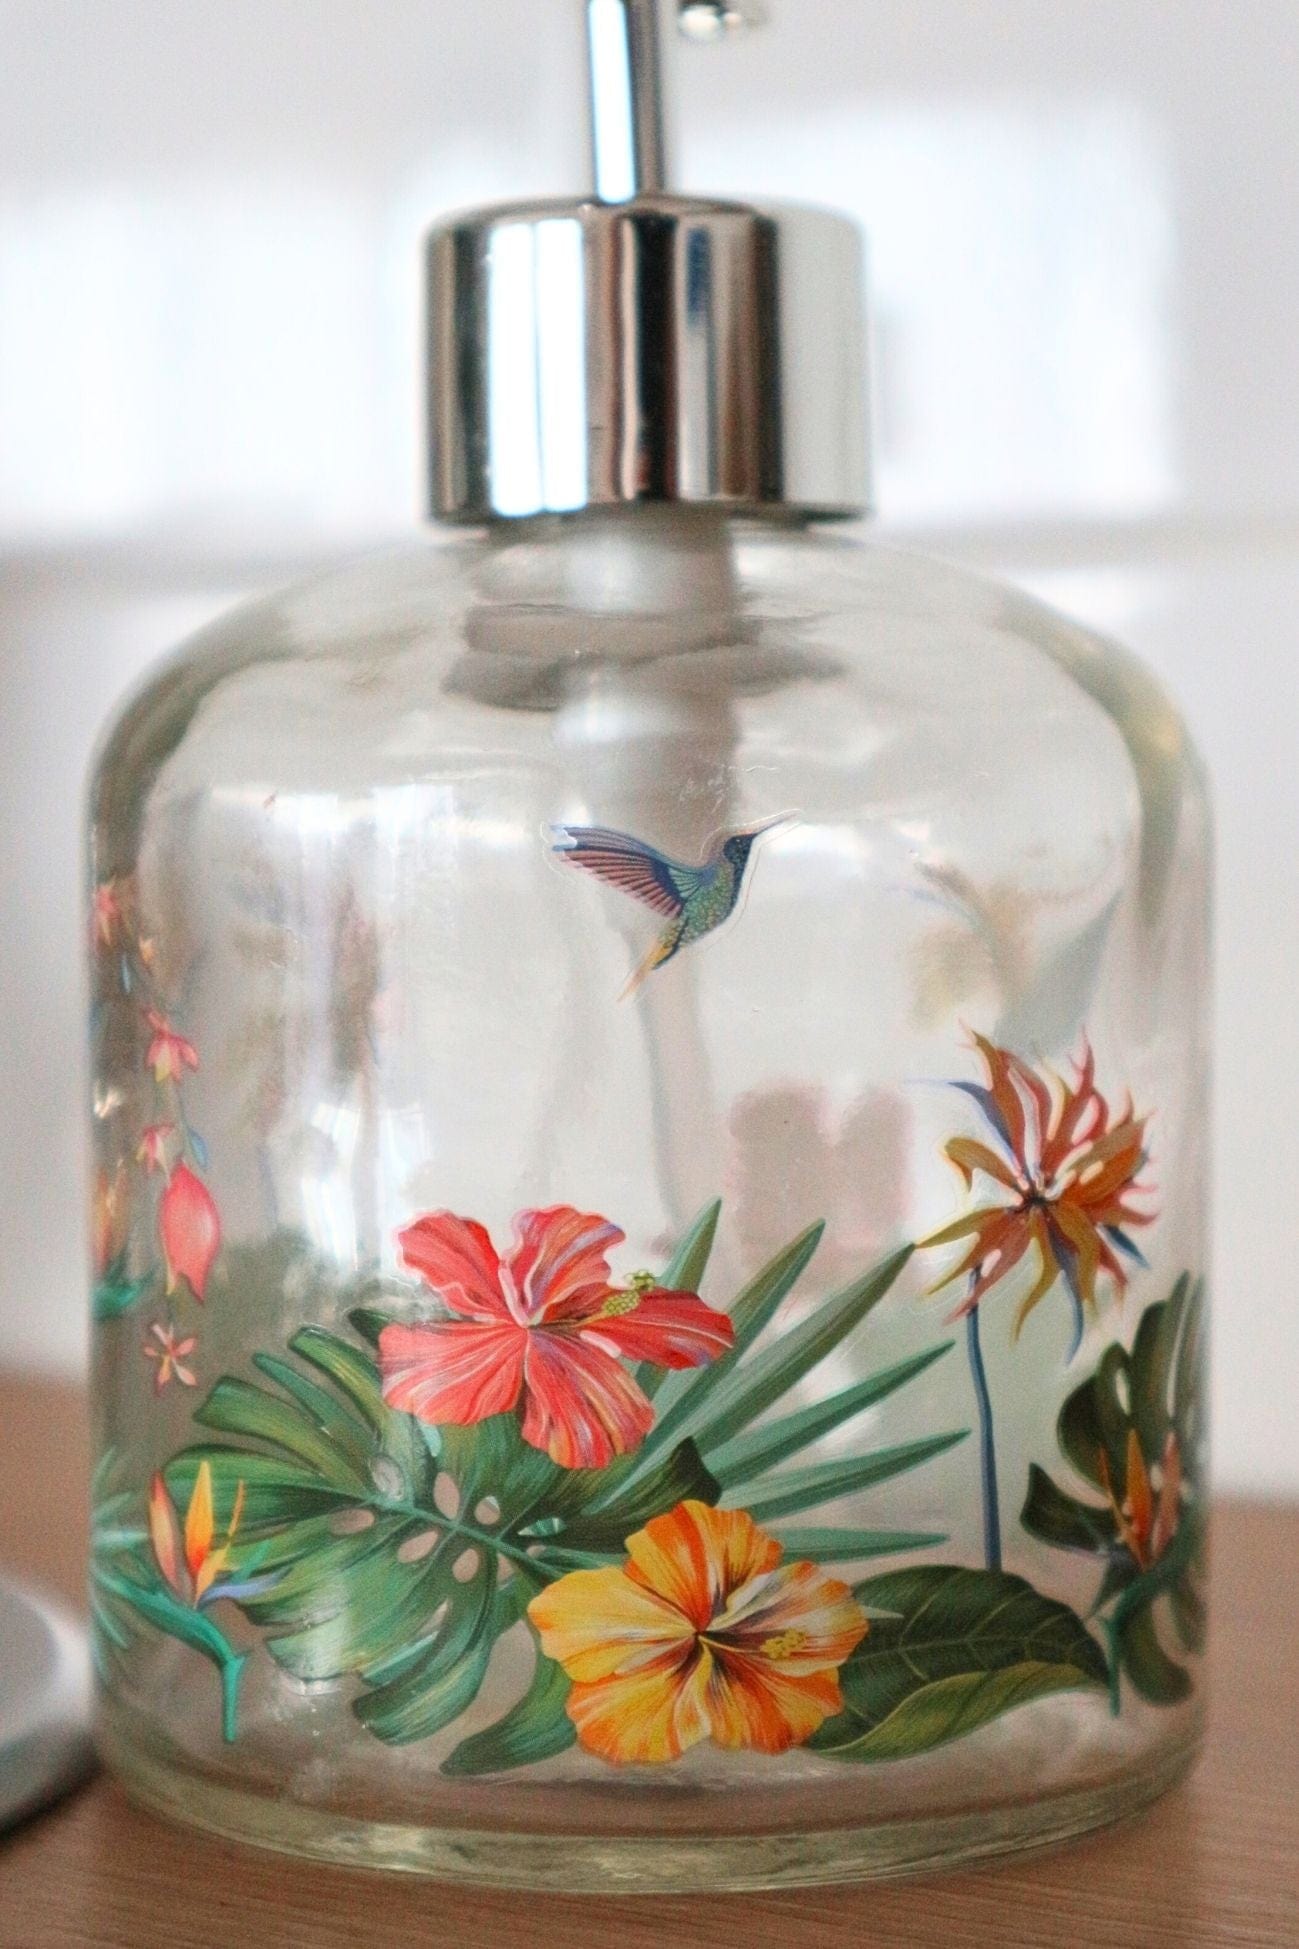 Item International Galia Galia - Dosatore di sapone in vetro con motivo floreale | Item International